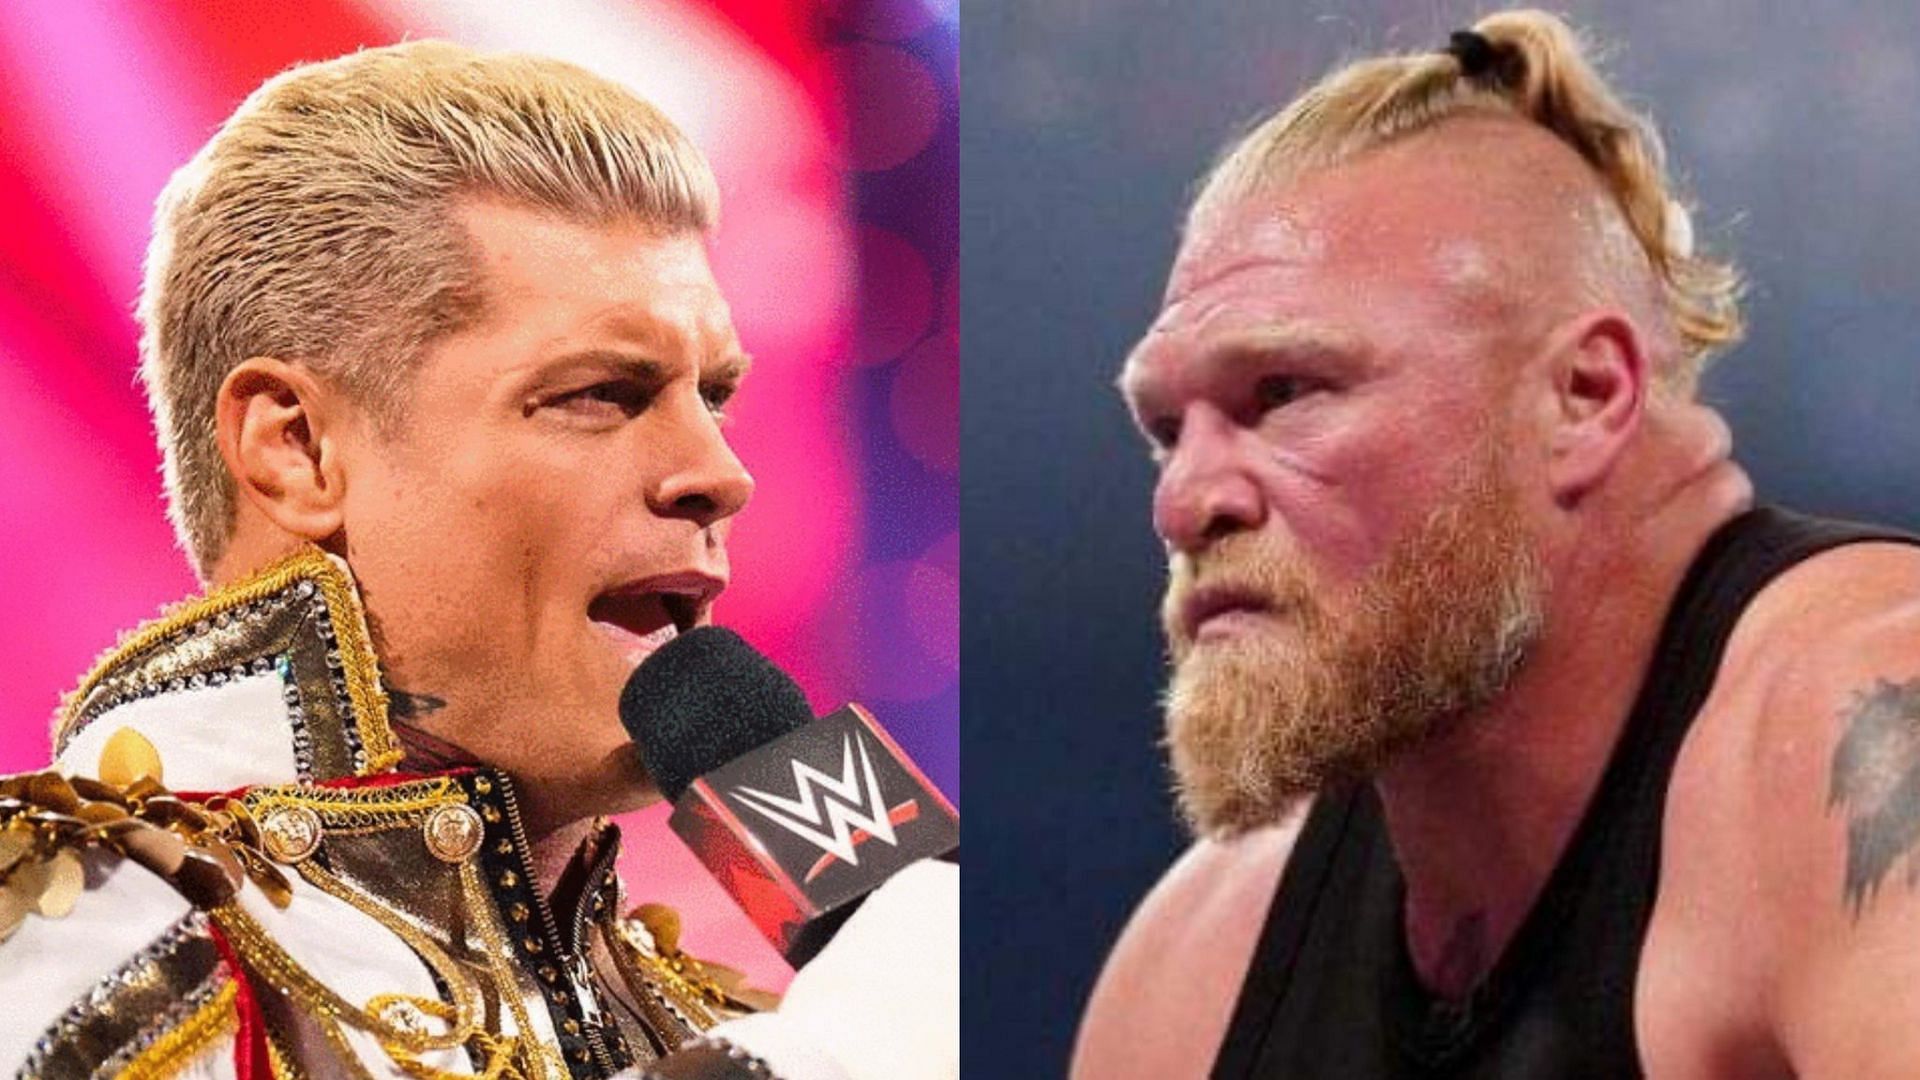 Cody Rhodes and Brock Lesnar